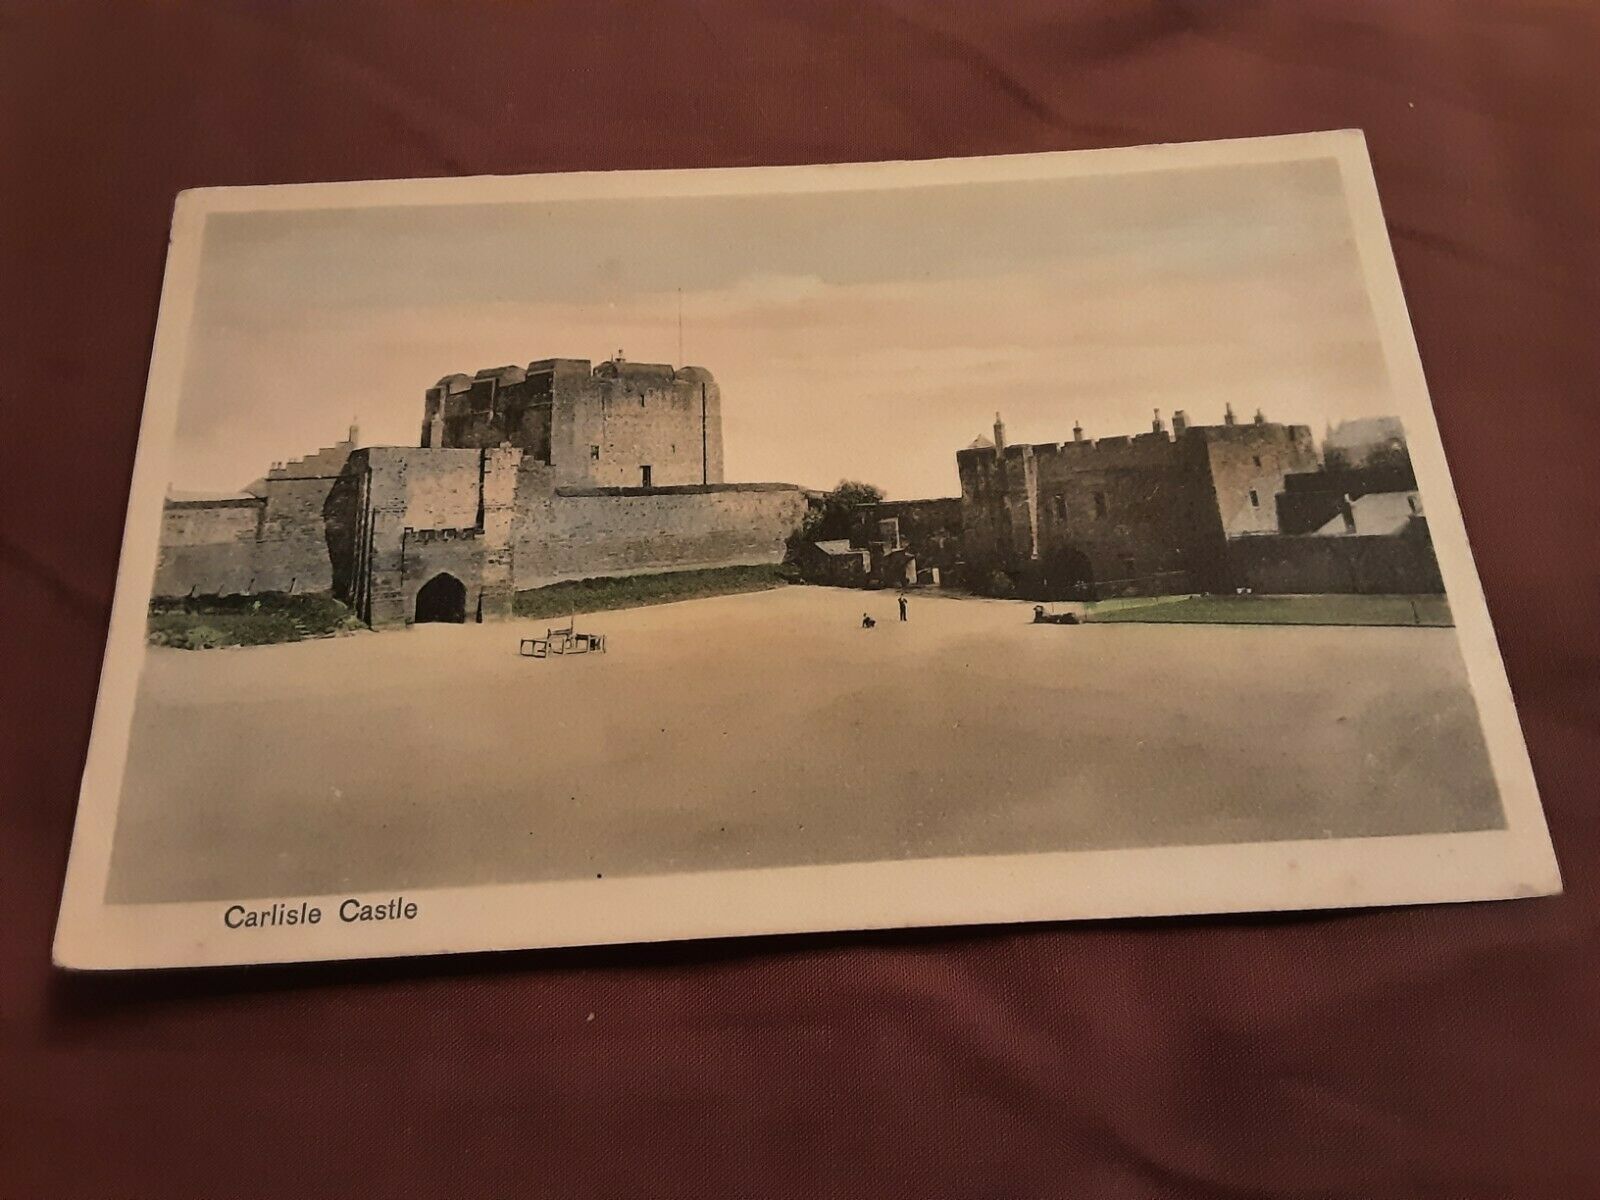 House Clearance - Old Jackson service of Carlisle Castle, Cumbria